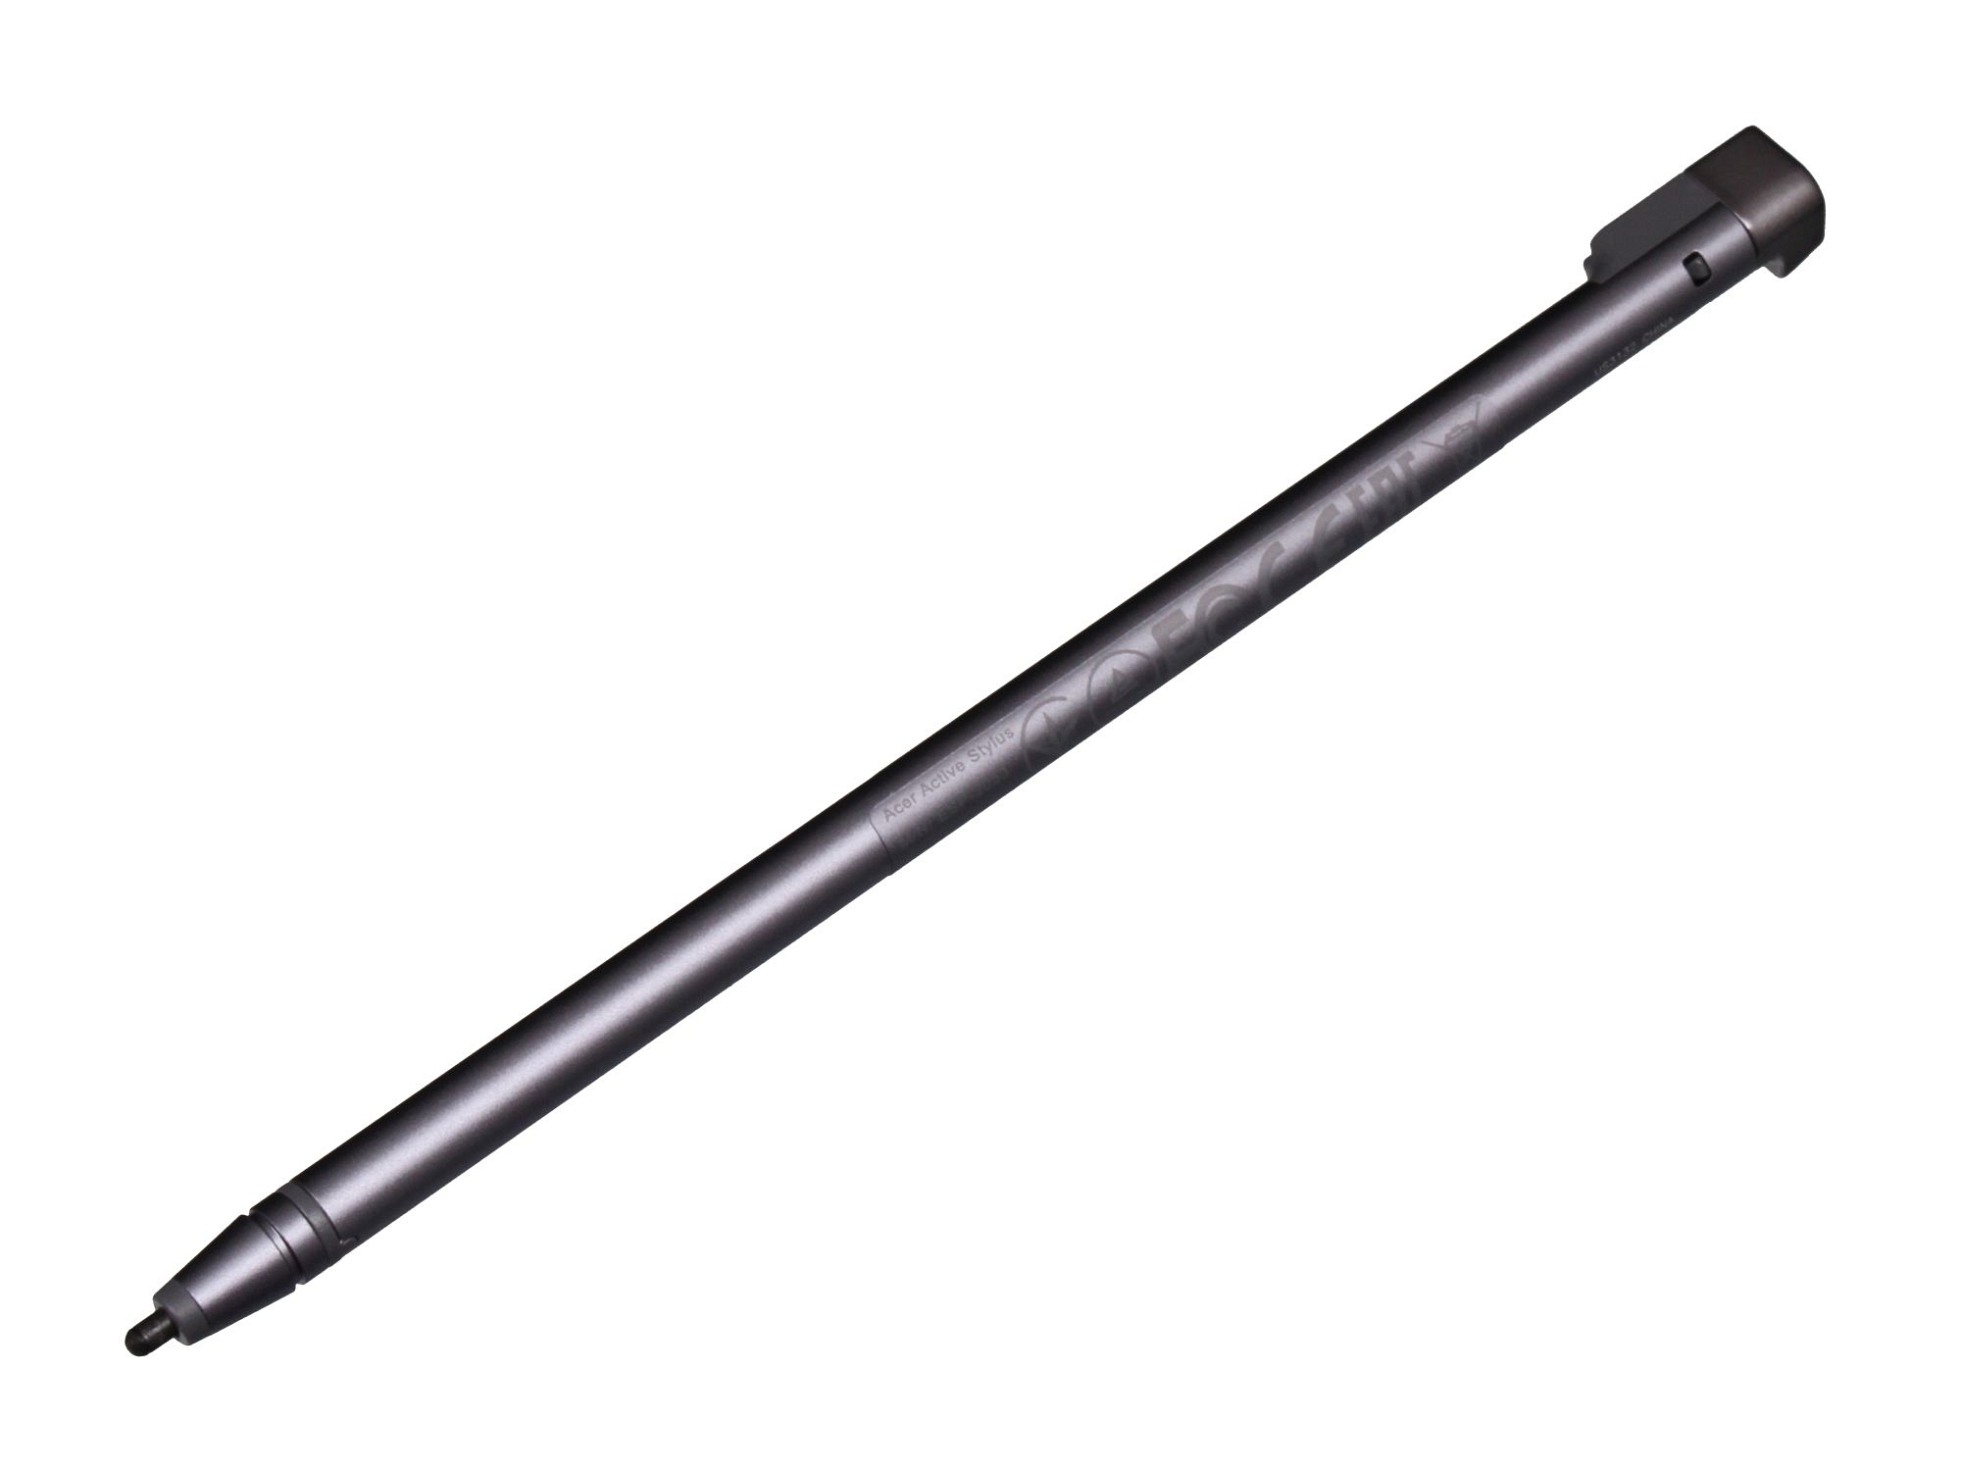 Acer ESP-2053 Stylus Pen